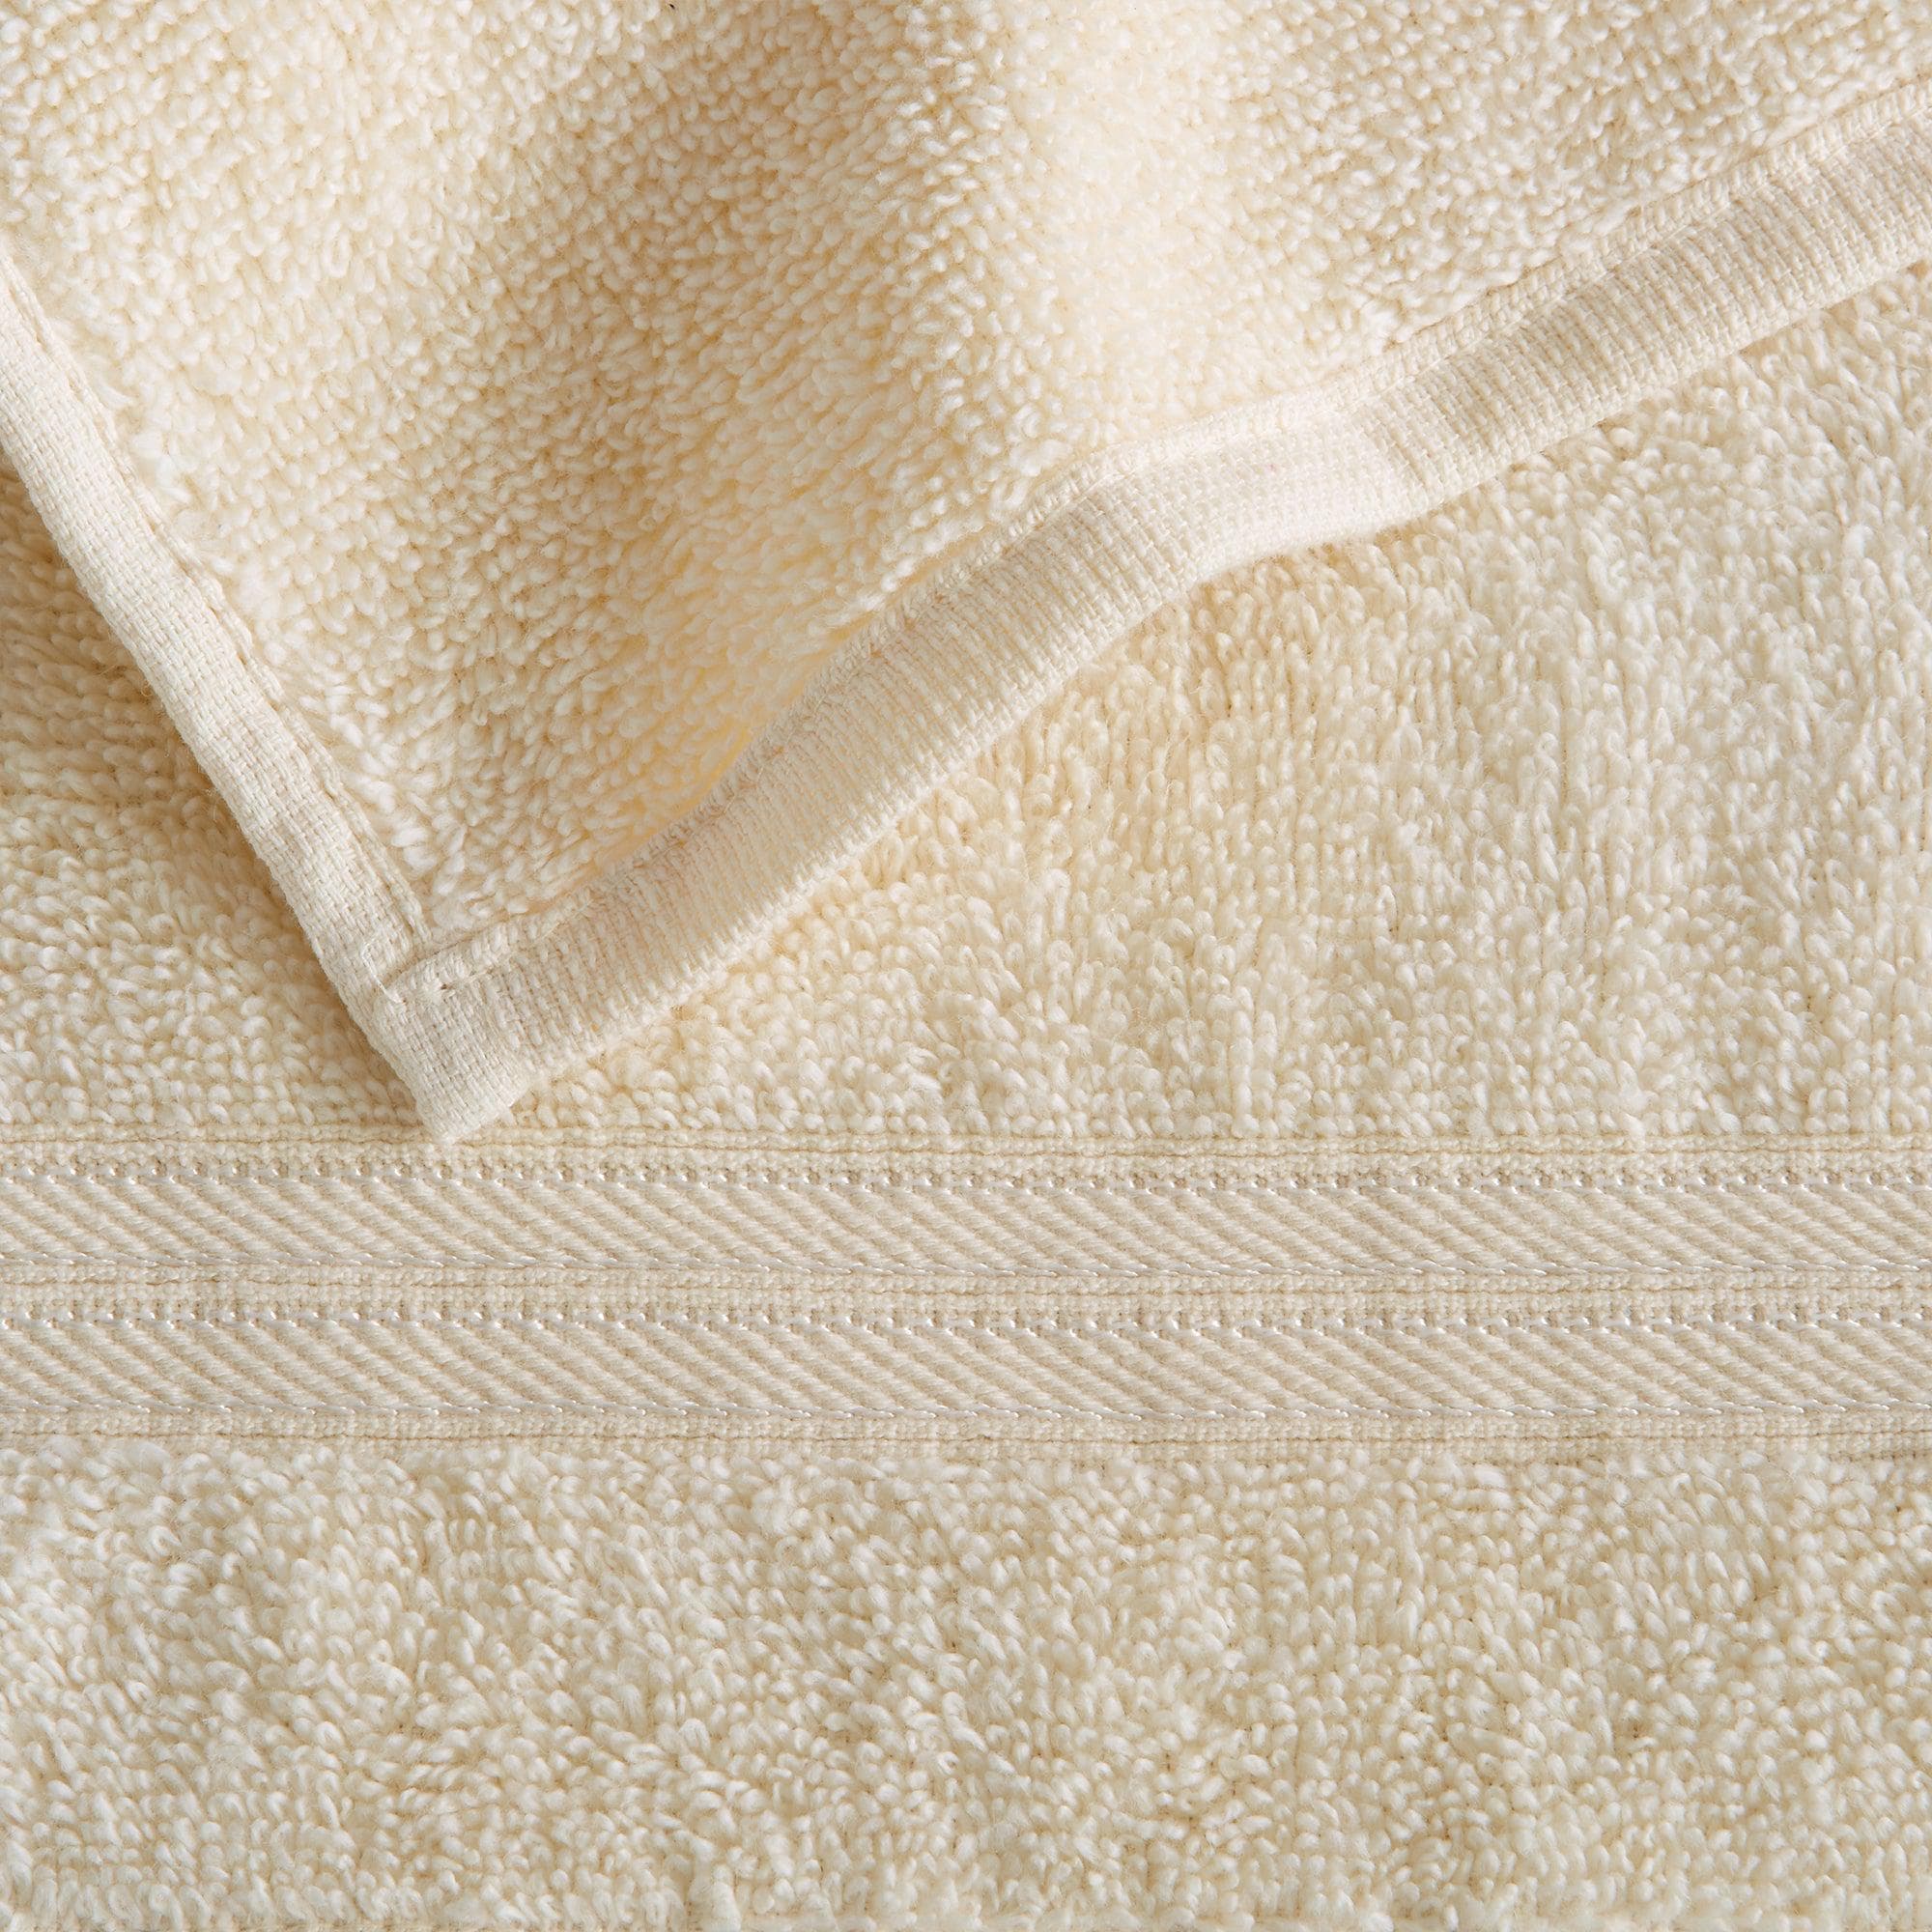 Braylon Supersoft 6 Piece 100% Cotton Towel Set Bay Isle Home Color: Butter